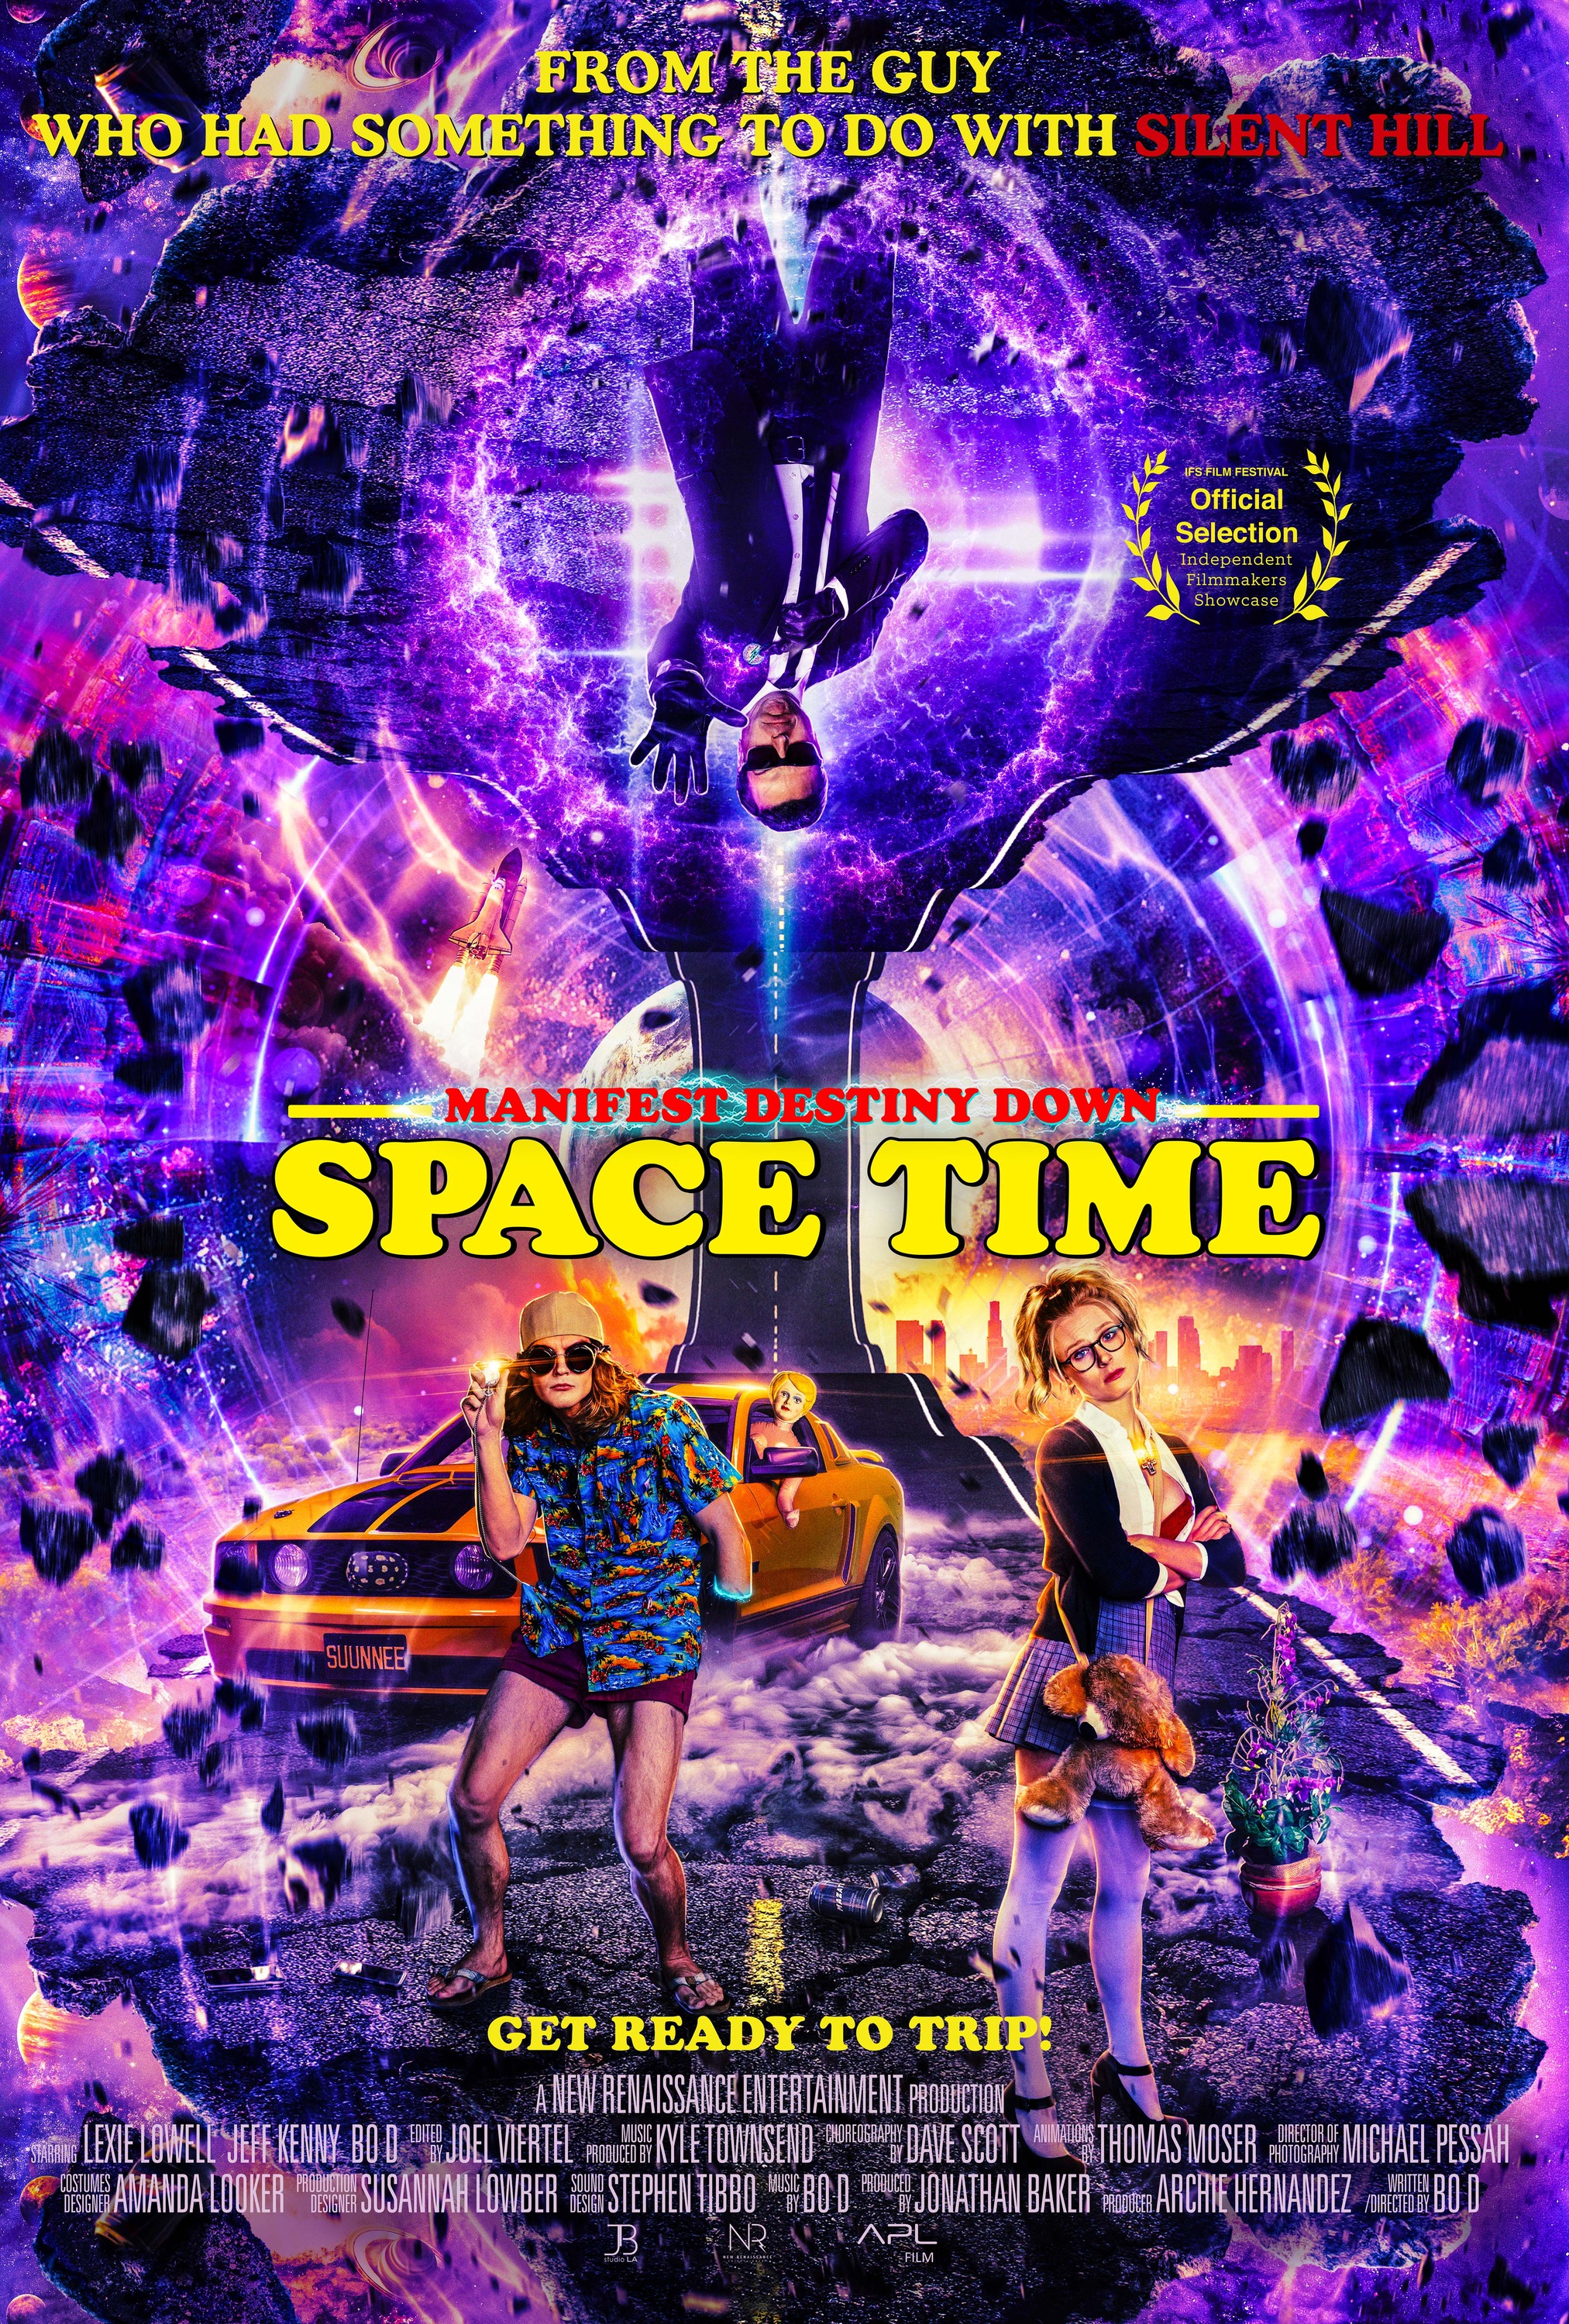 Mega Sized Movie Poster Image for Manifest Destiny Down: Spacetime 